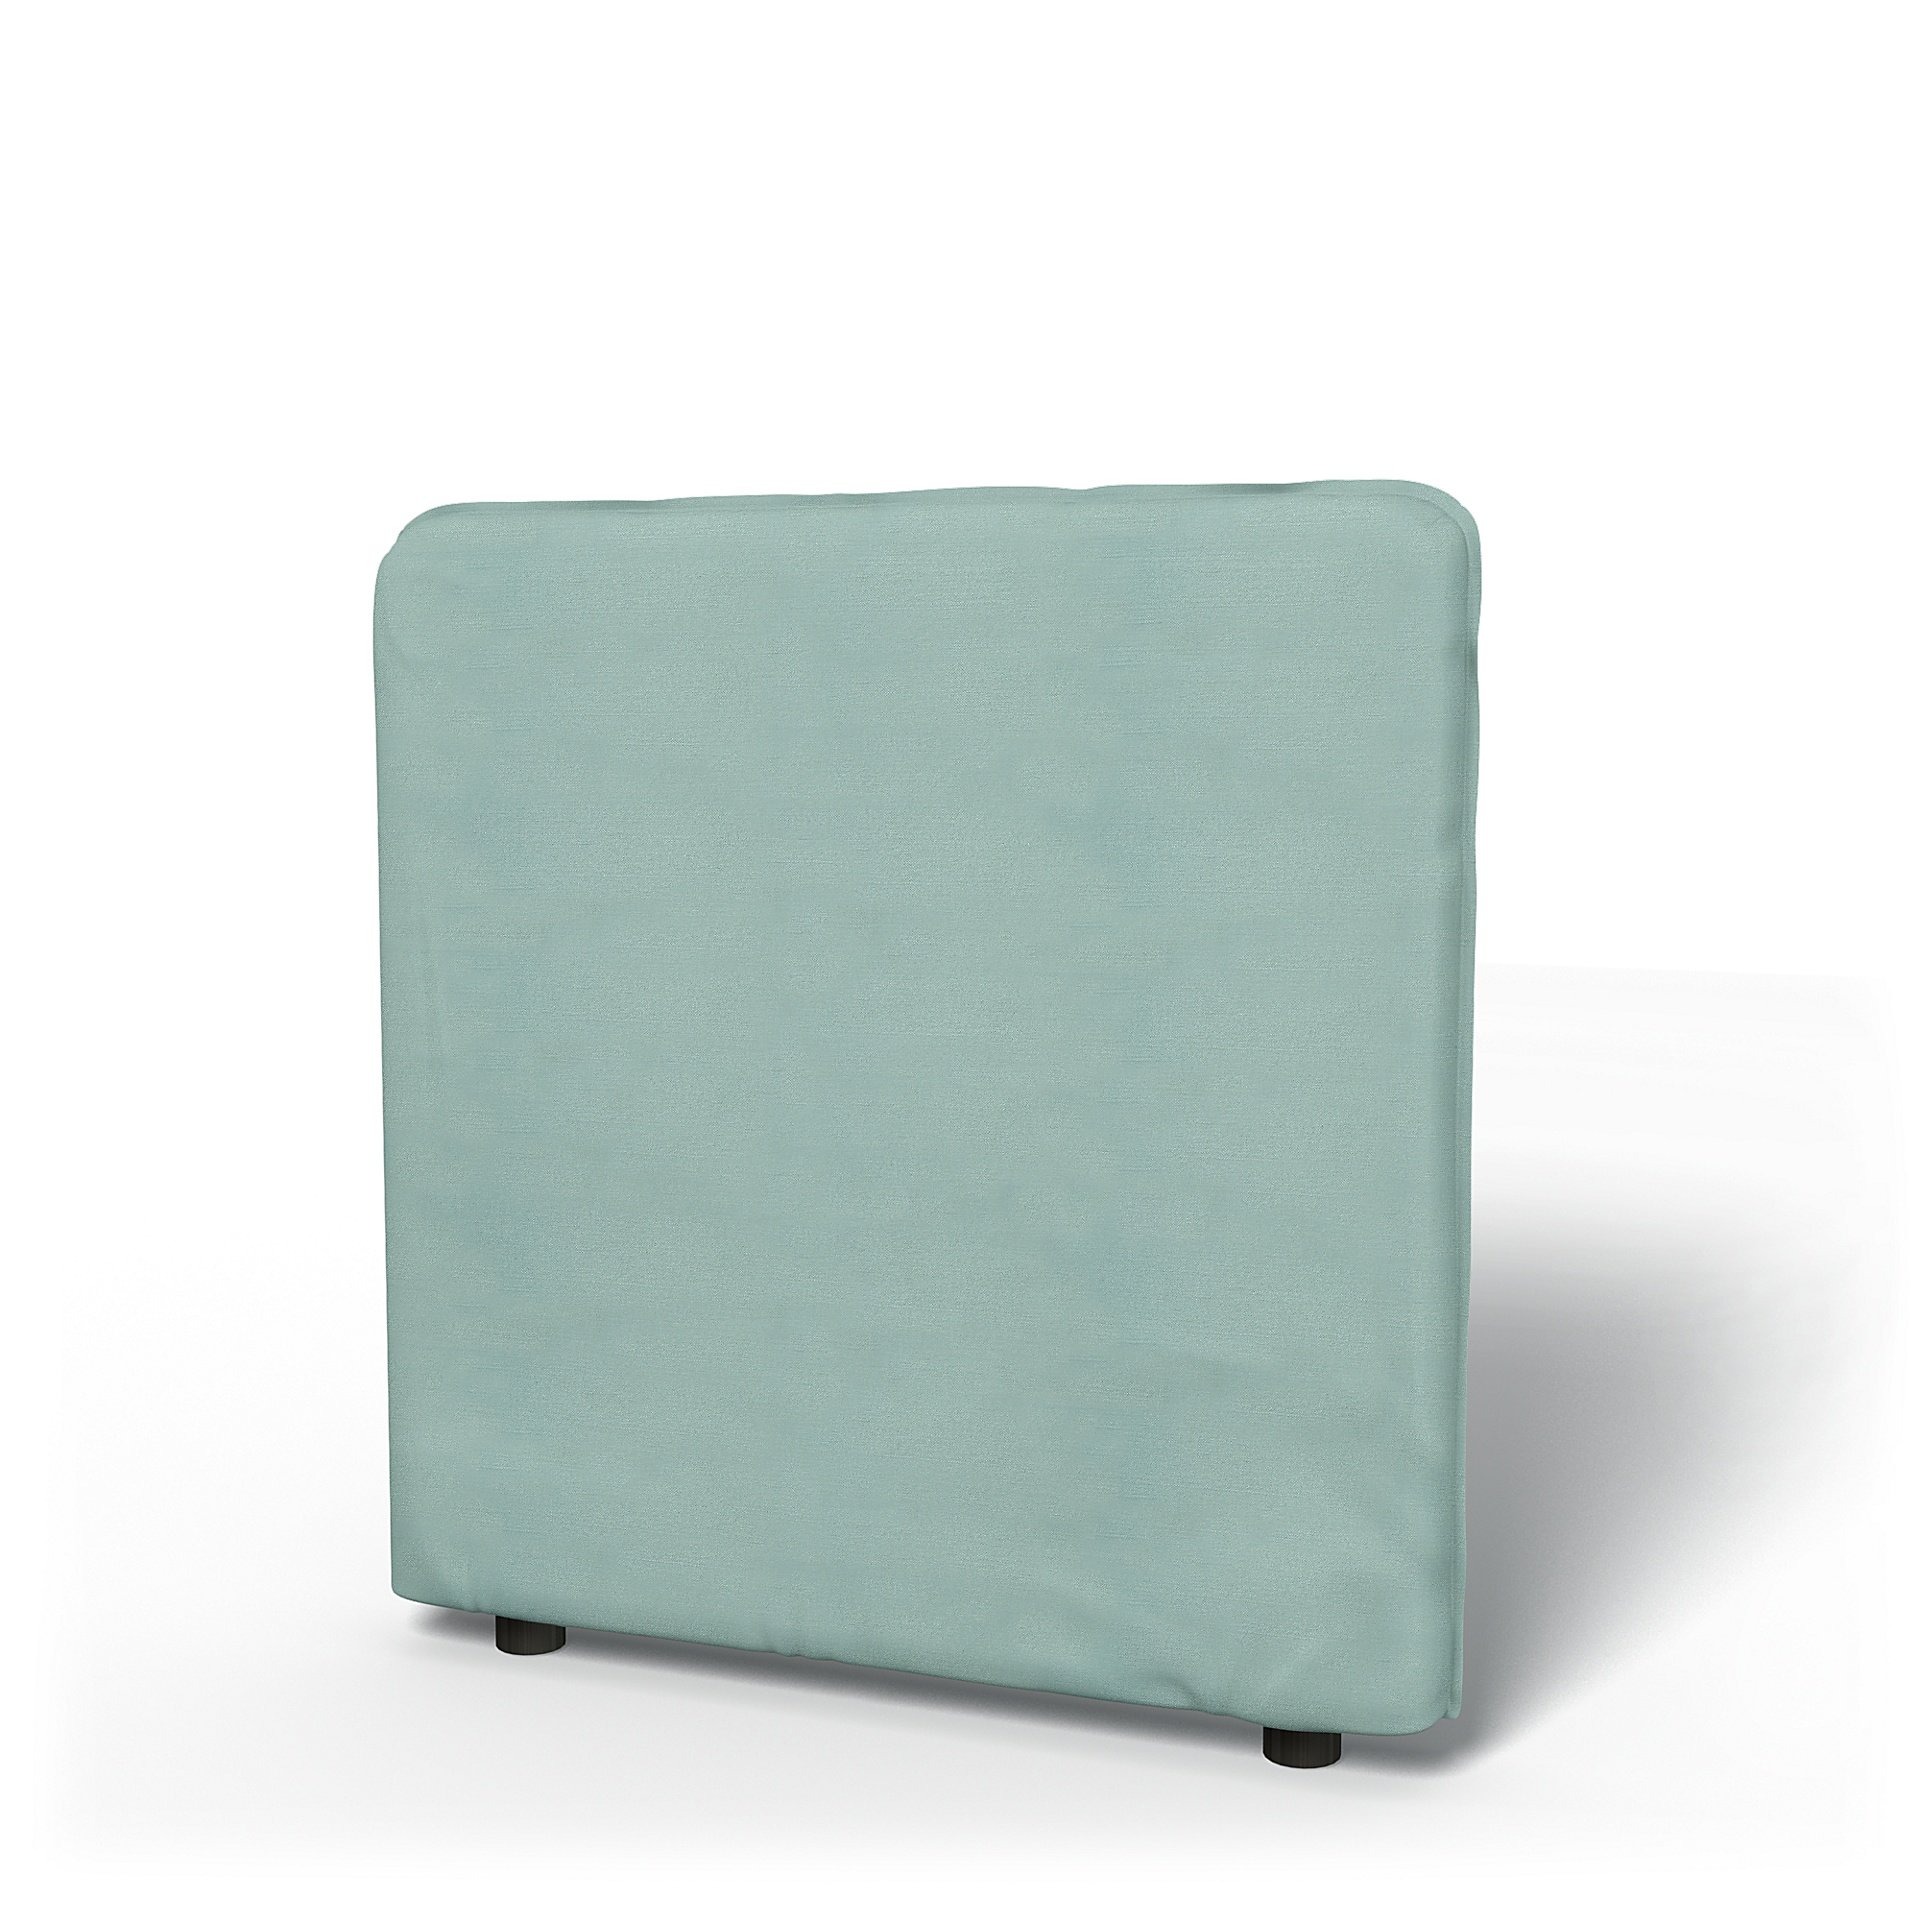 IKEA - Vallentuna Low Backrest Cover 80x80cm 32x32in, Mineral Blue, Linen - Bemz